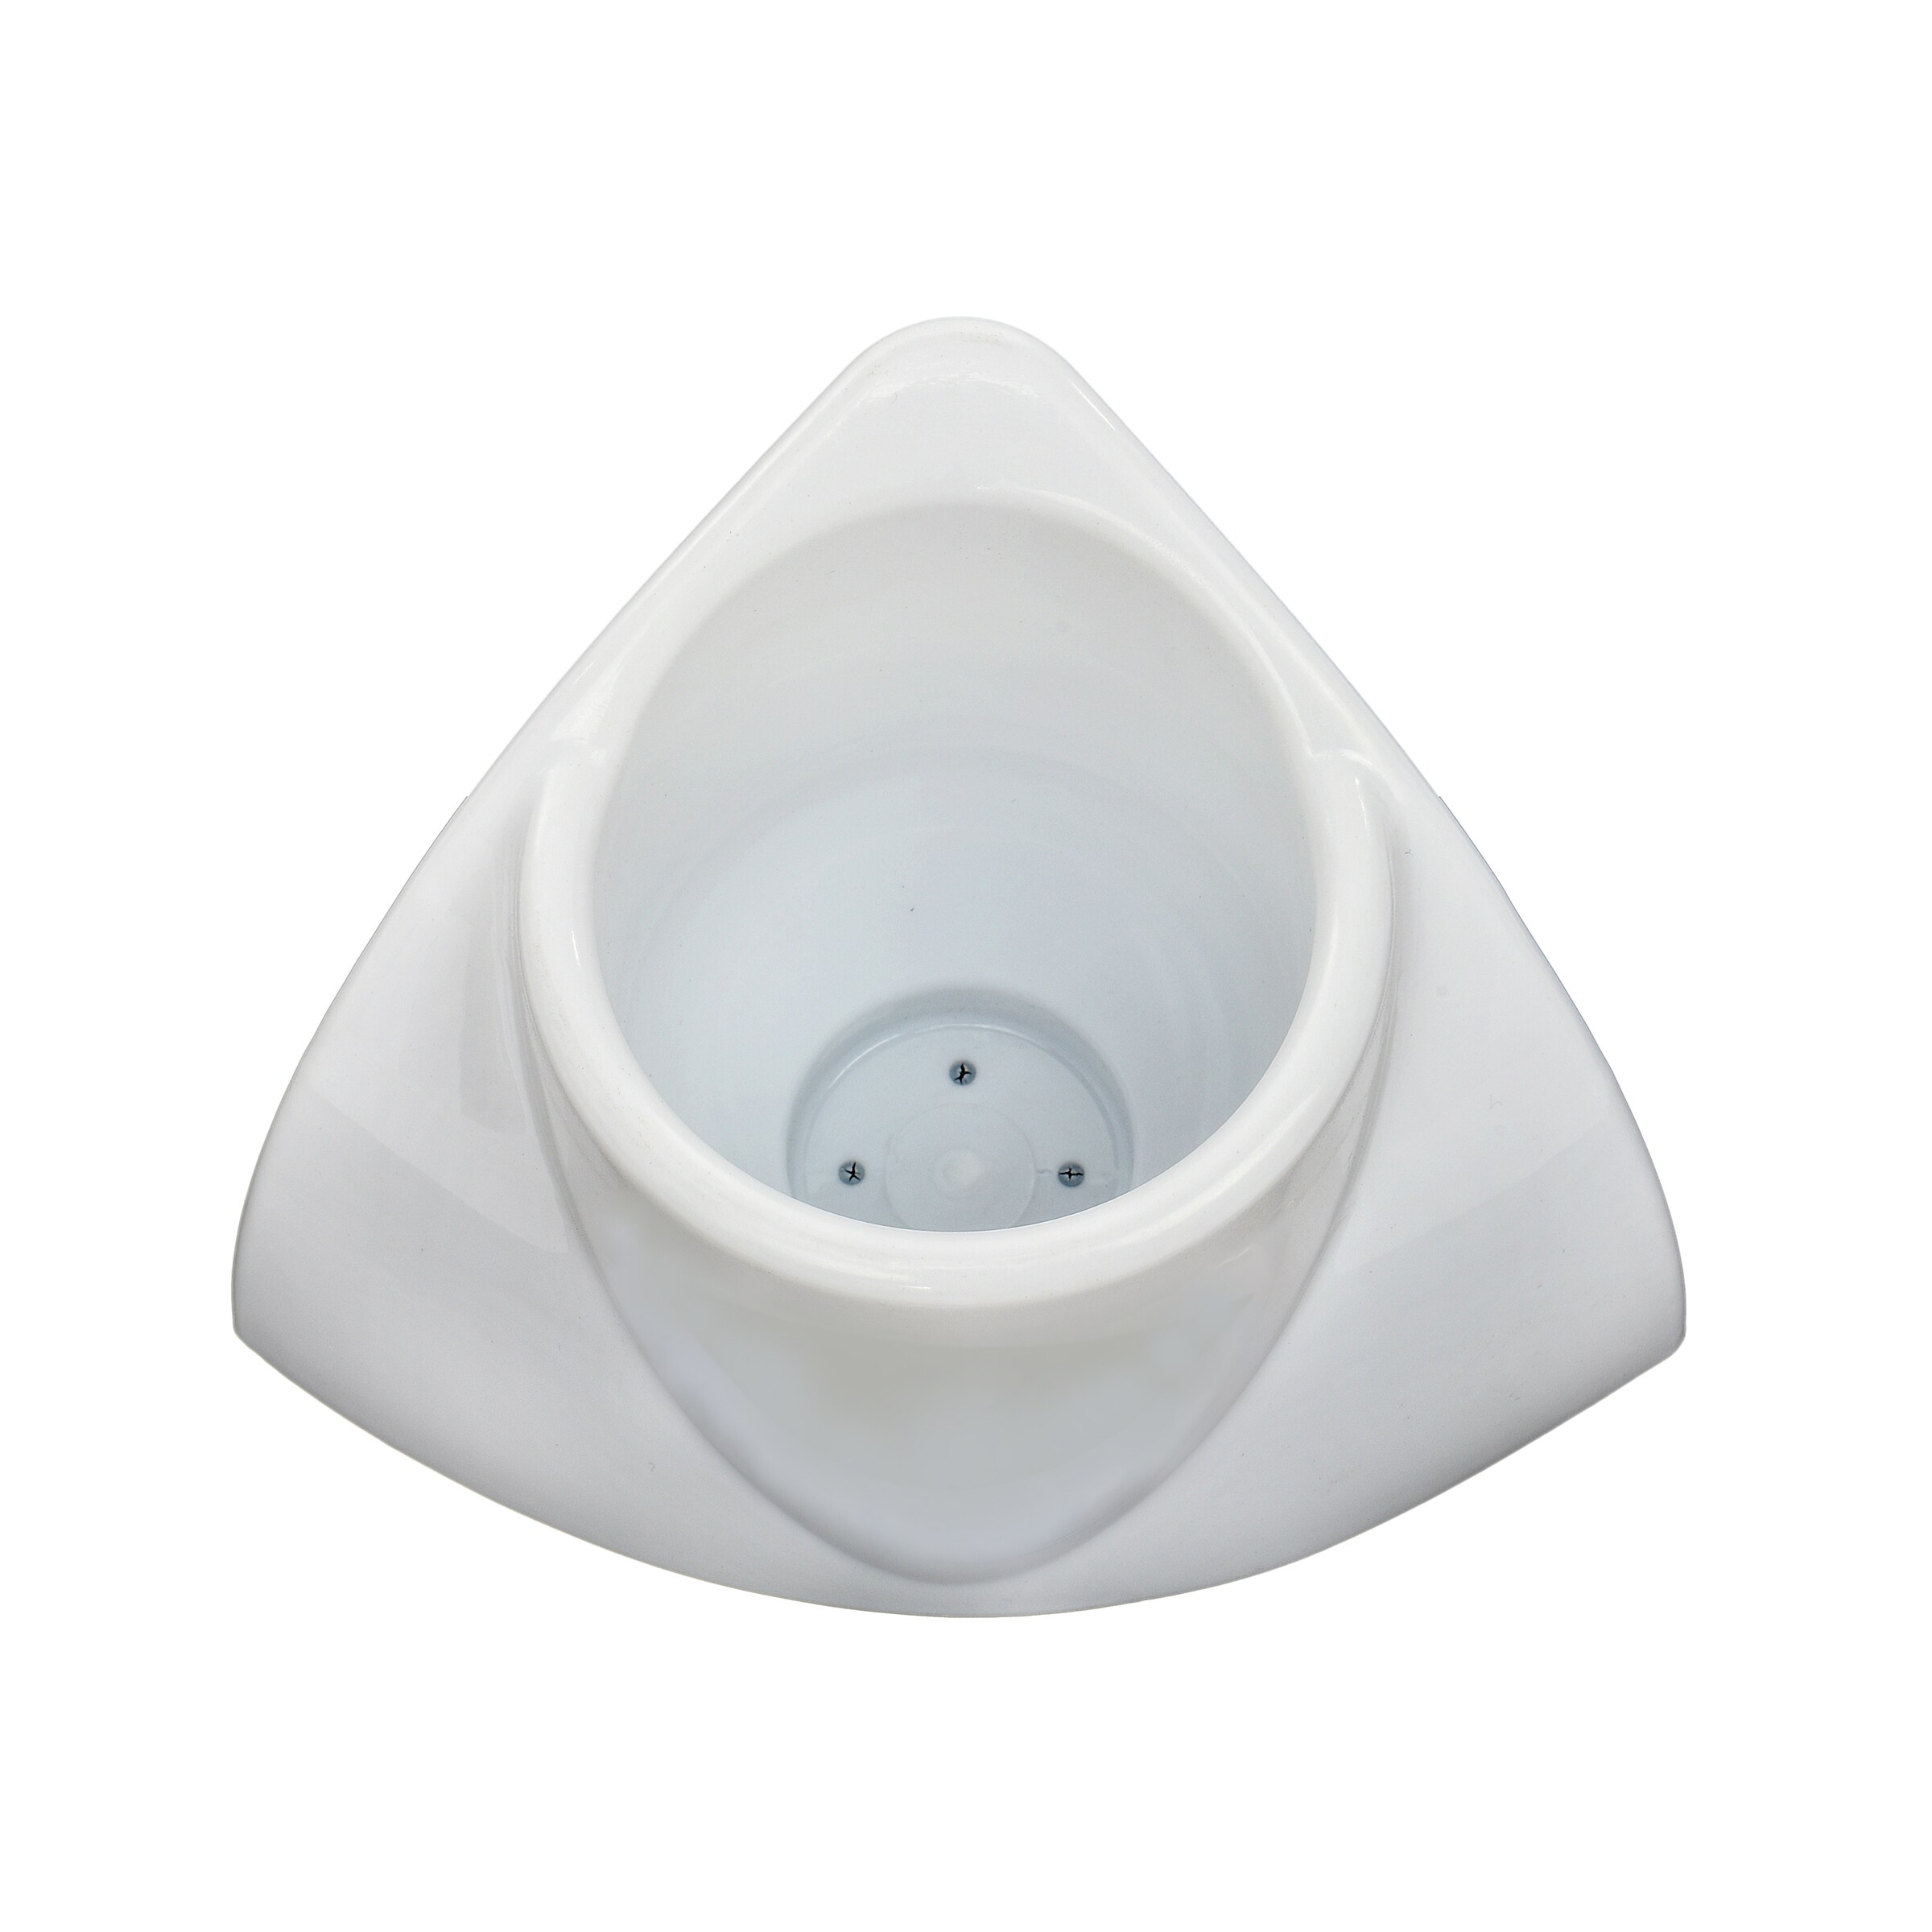 Alpine Industries 16 in Plastic Toilet Bowl Brush and Holder White